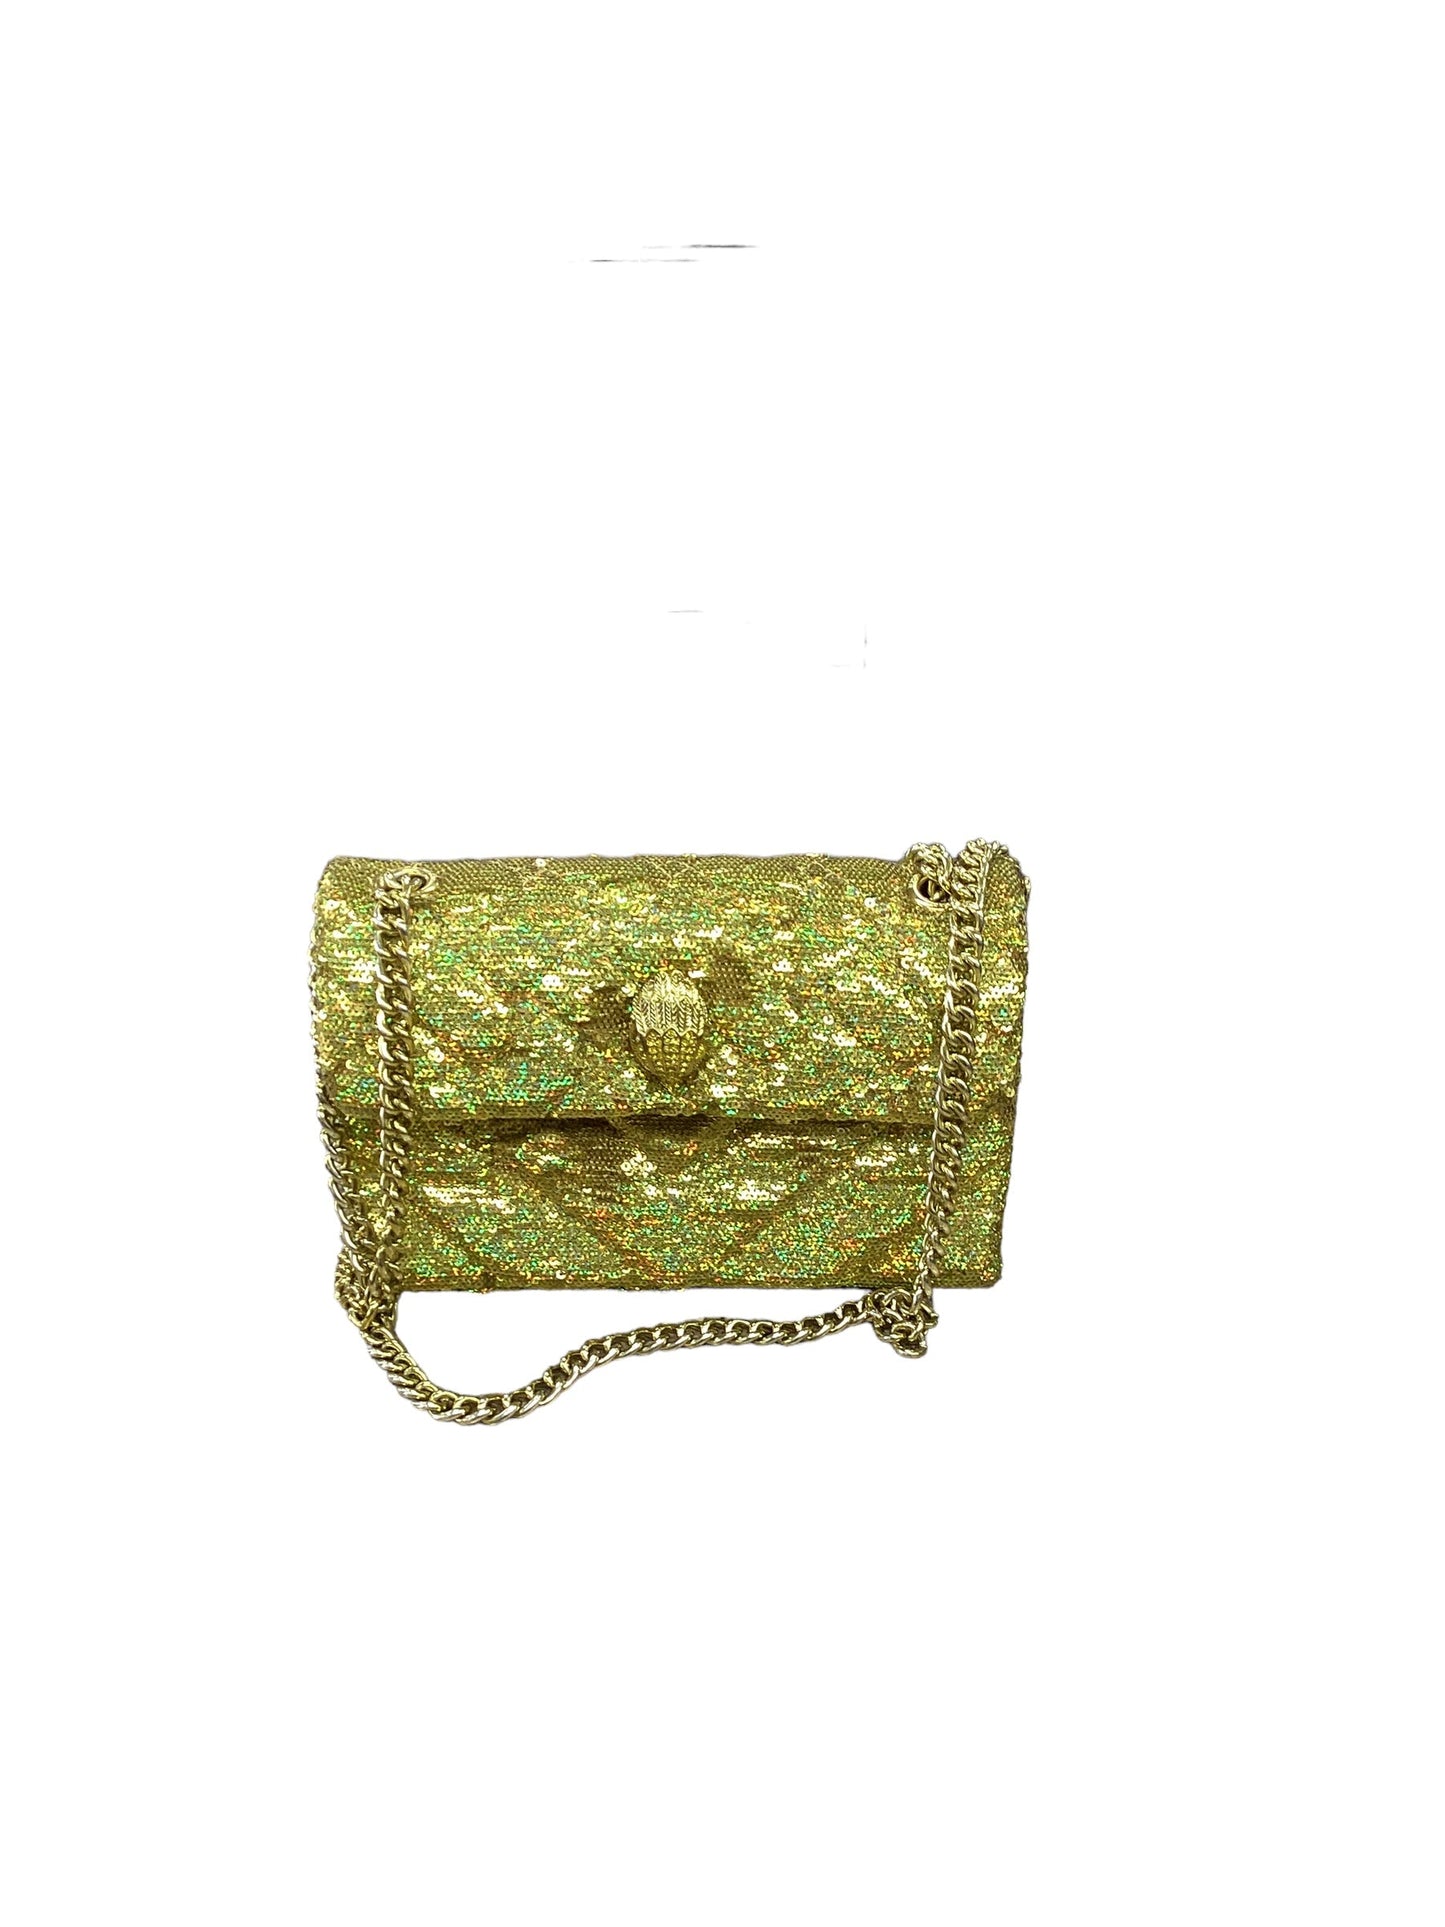 Handbag By Kurt Geiger  Size: Small